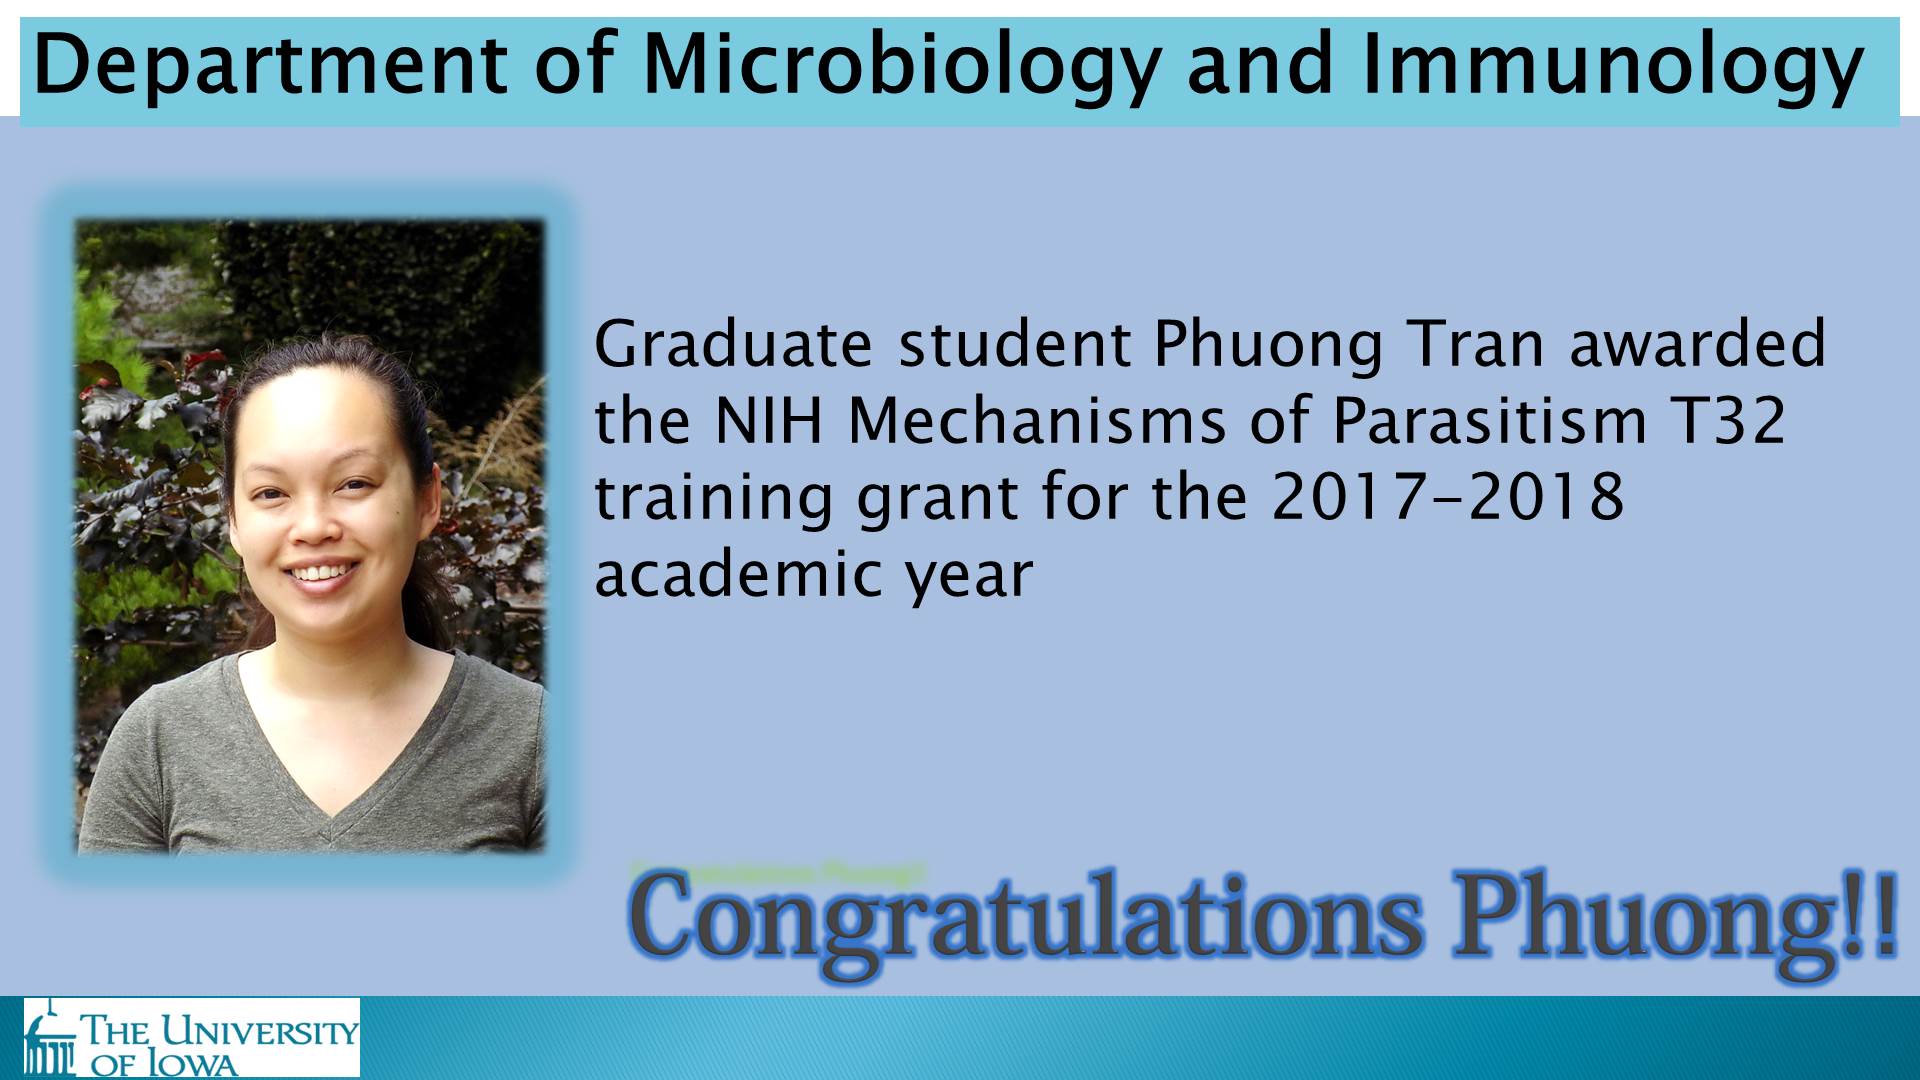 Gradute Student Phuong Tran awarded NIH funding